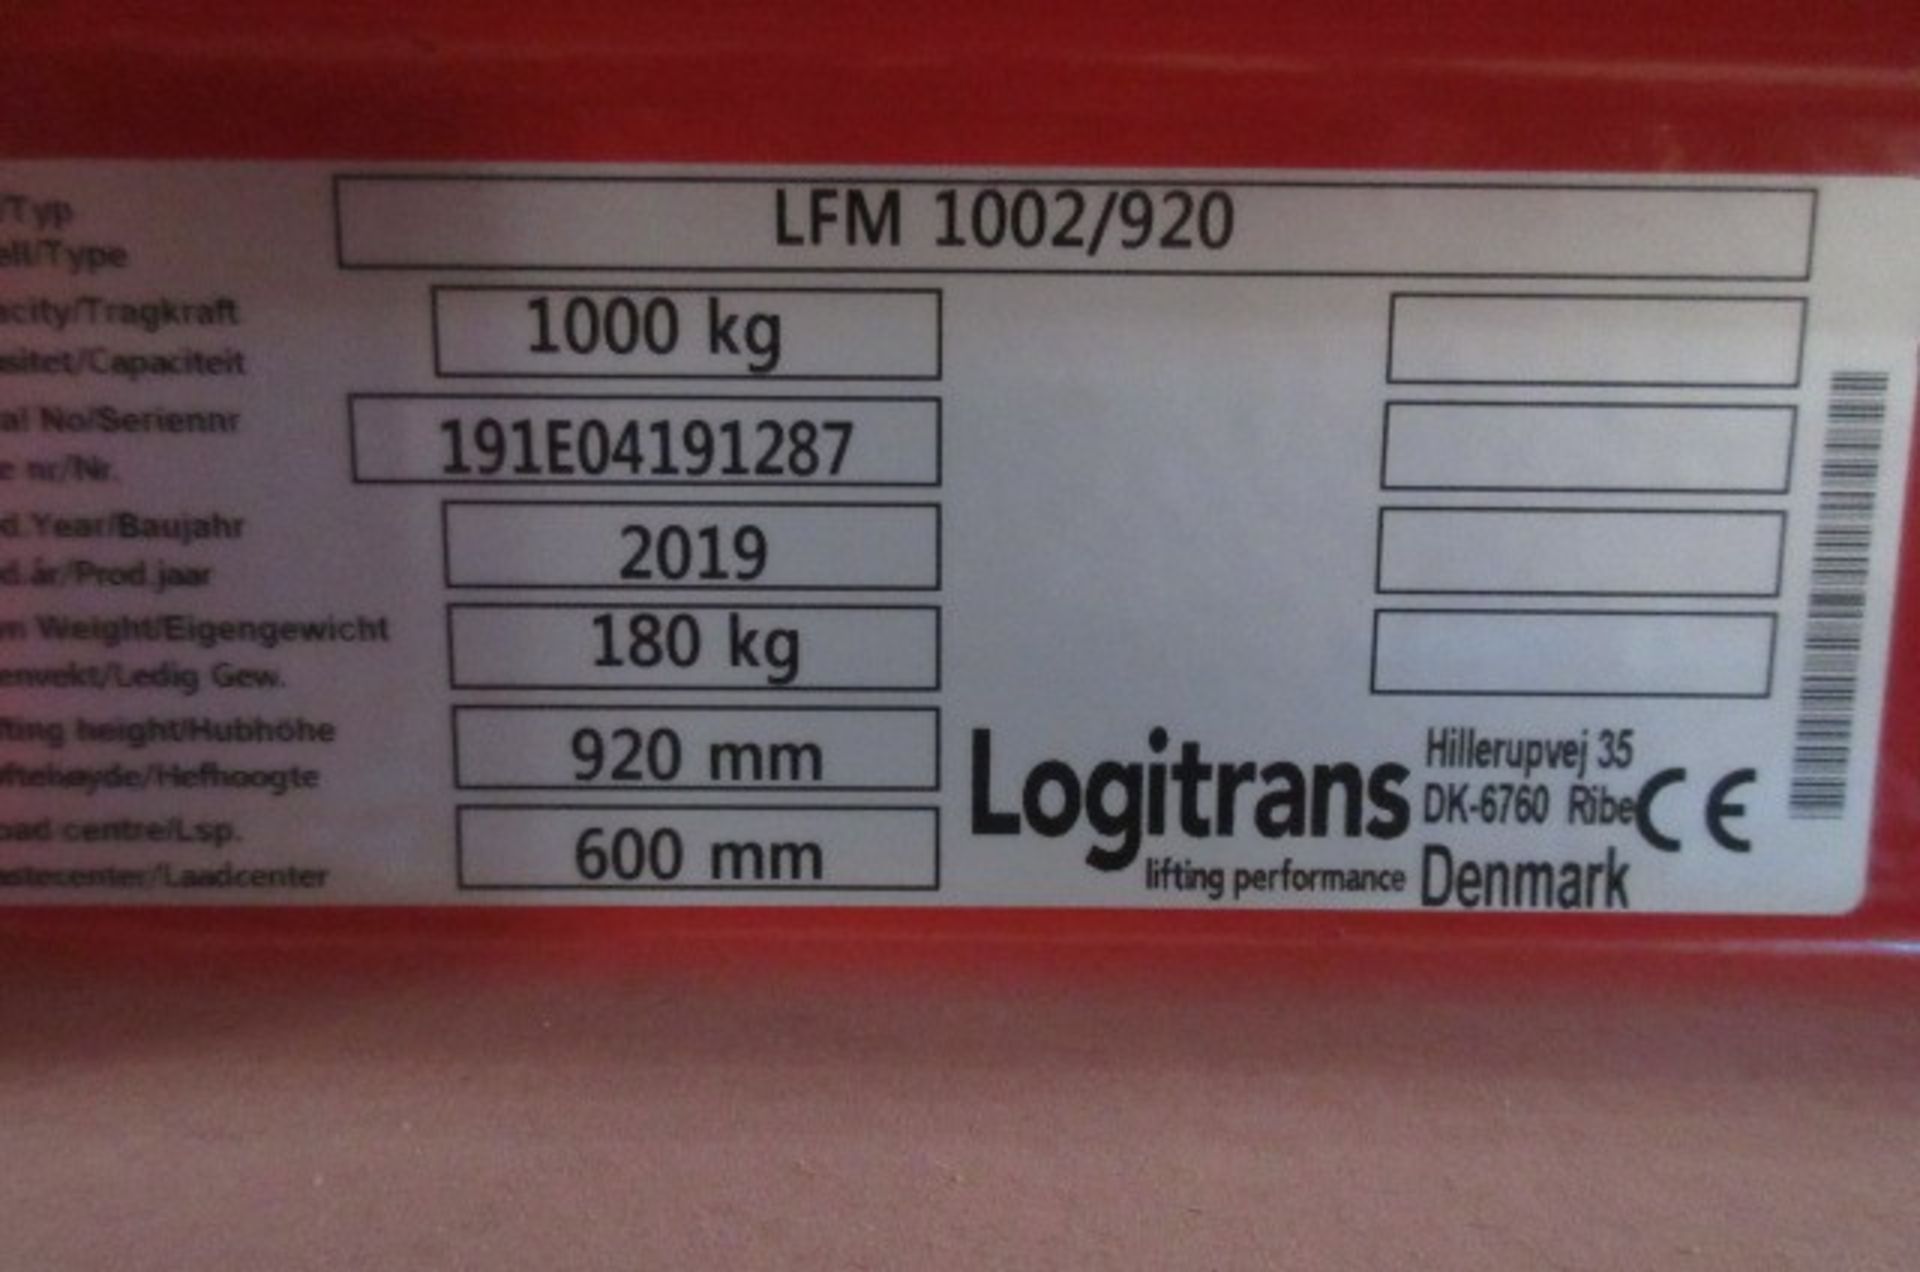 Logitrans LFM 1002/920 Pedestrian Barrel Lifter - Image 4 of 4